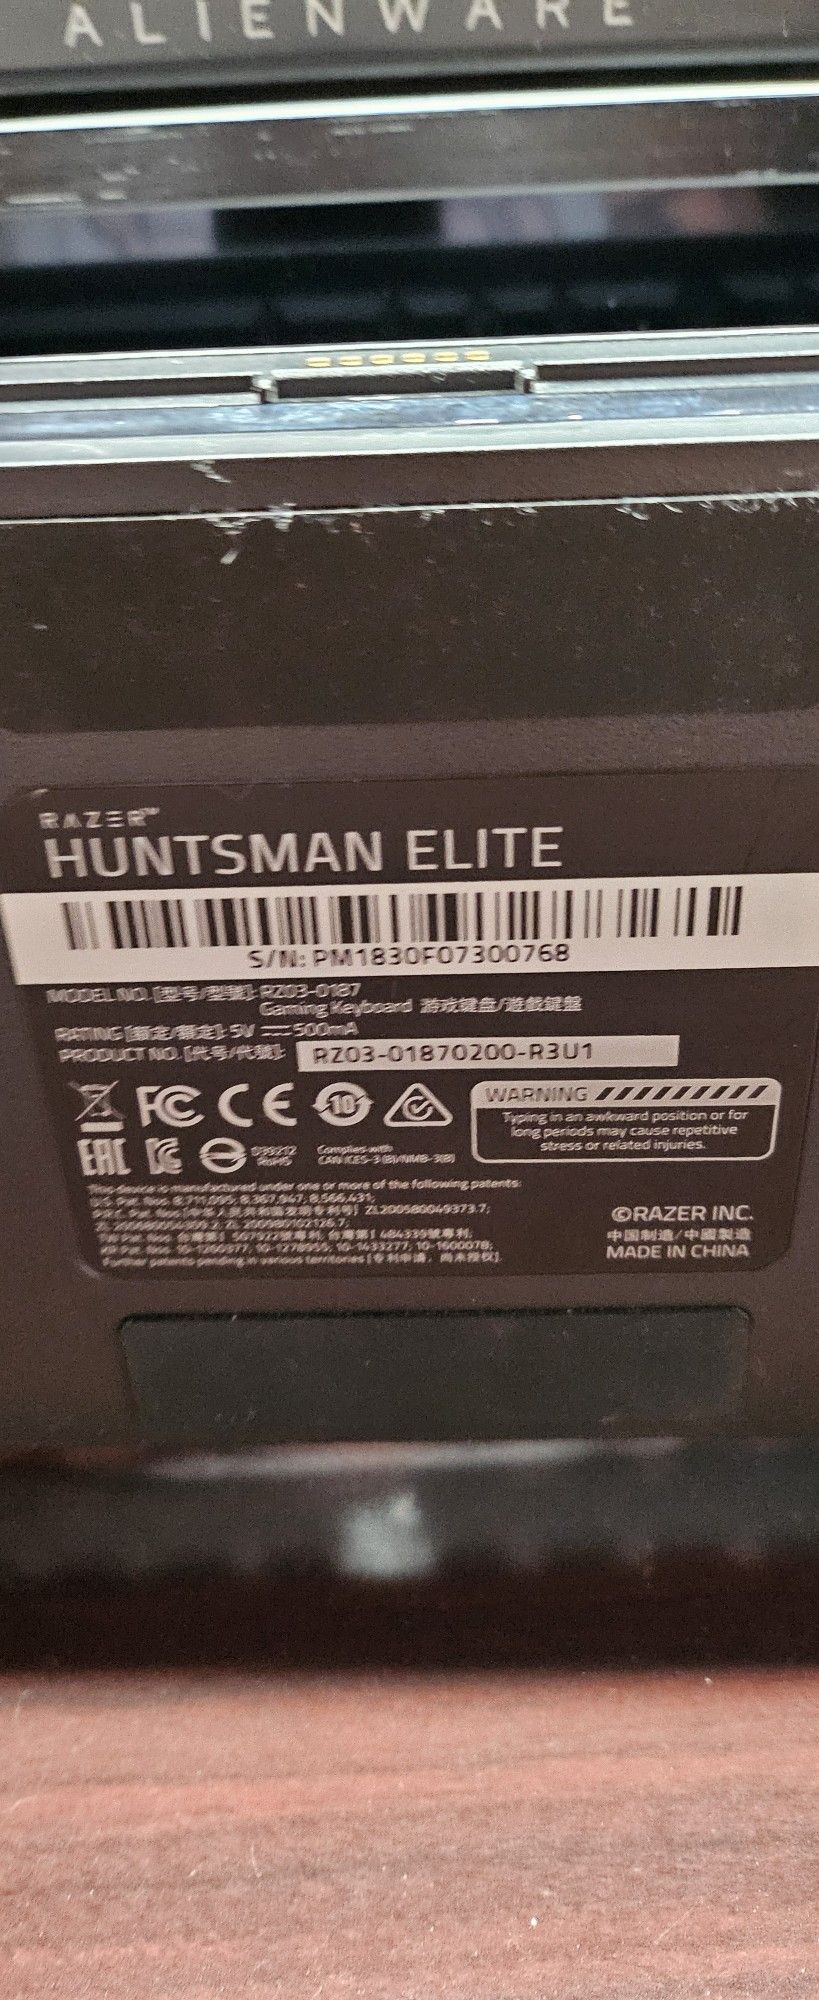 Razor Huntsman Elite Keyboard 